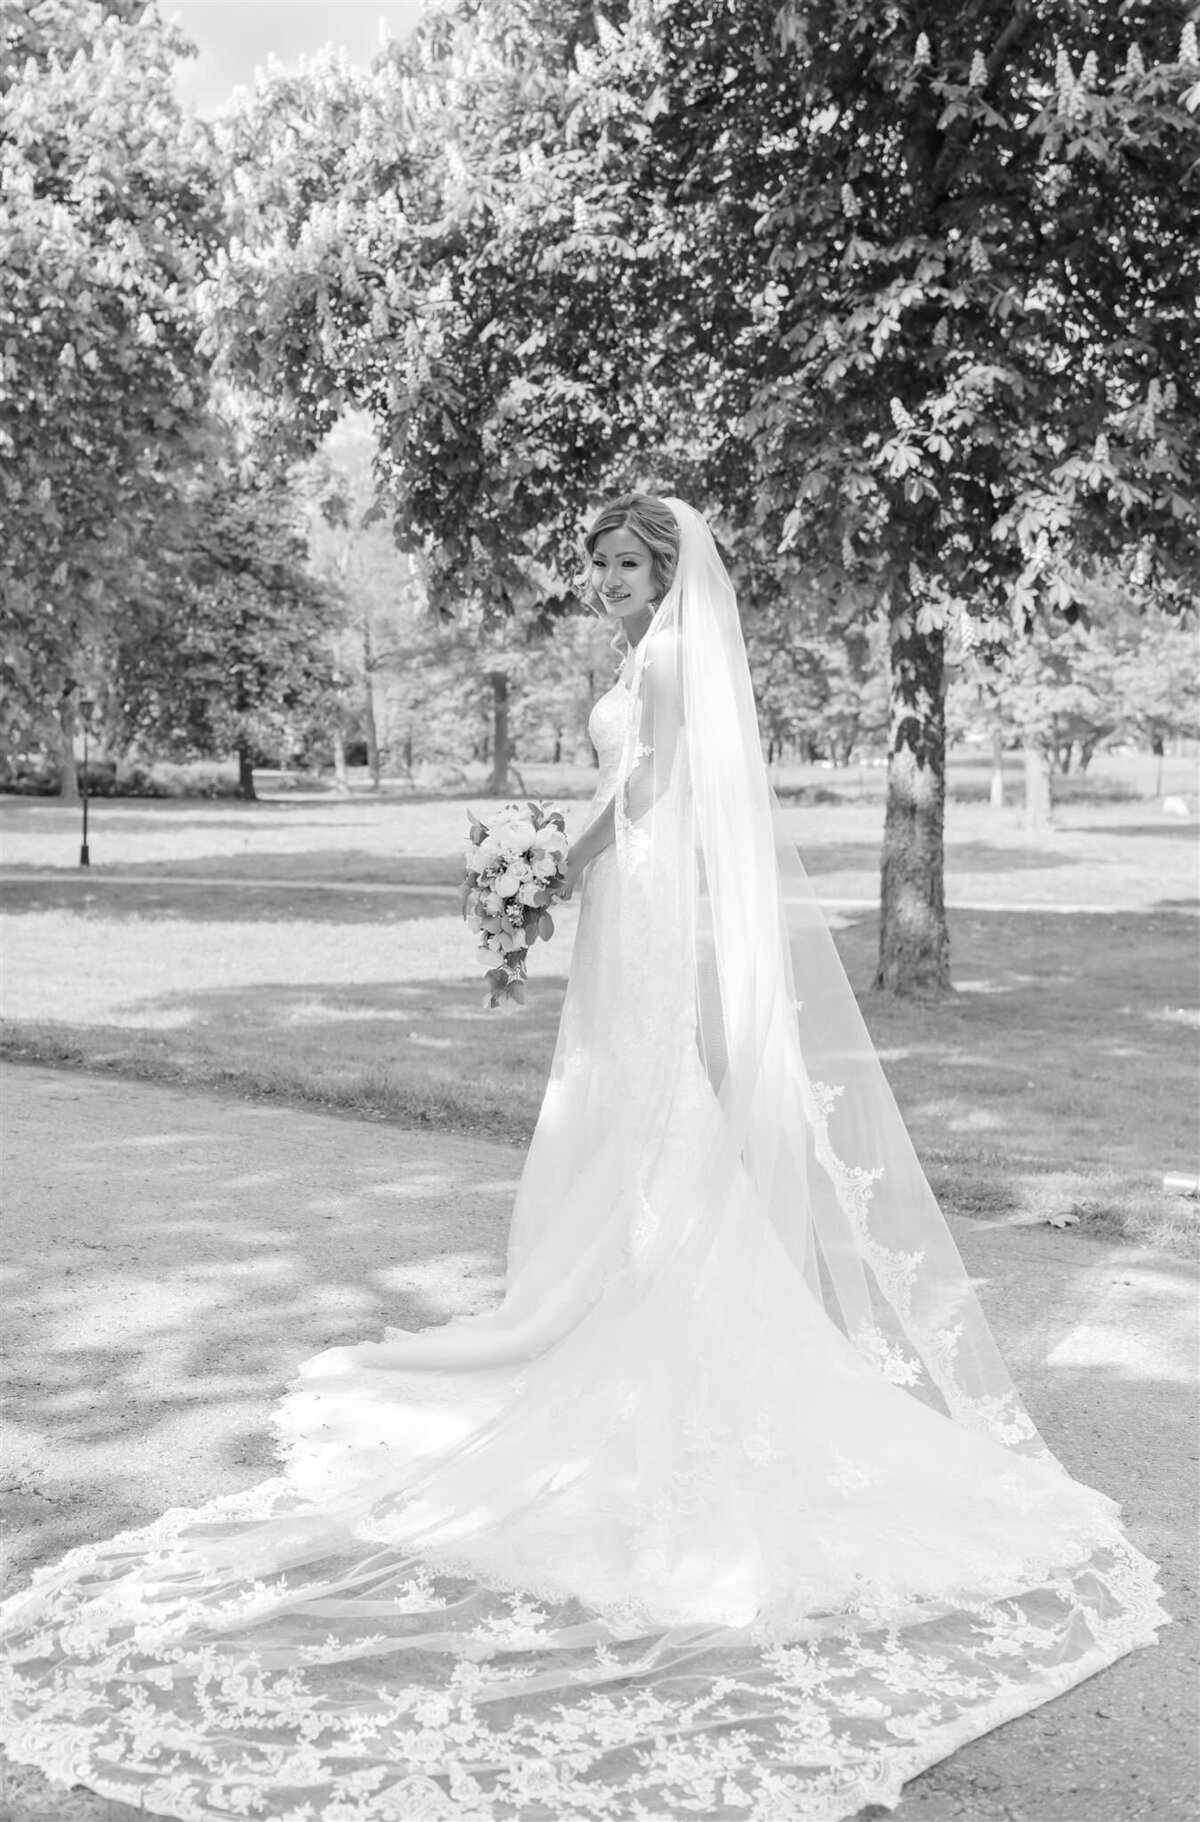 Wedding Photographer Anna Lundgren - helloalora_Rånäs Slott chateau wedding in Sweden timeless romantic bridal portraits in the castle garden white wedding bouquet